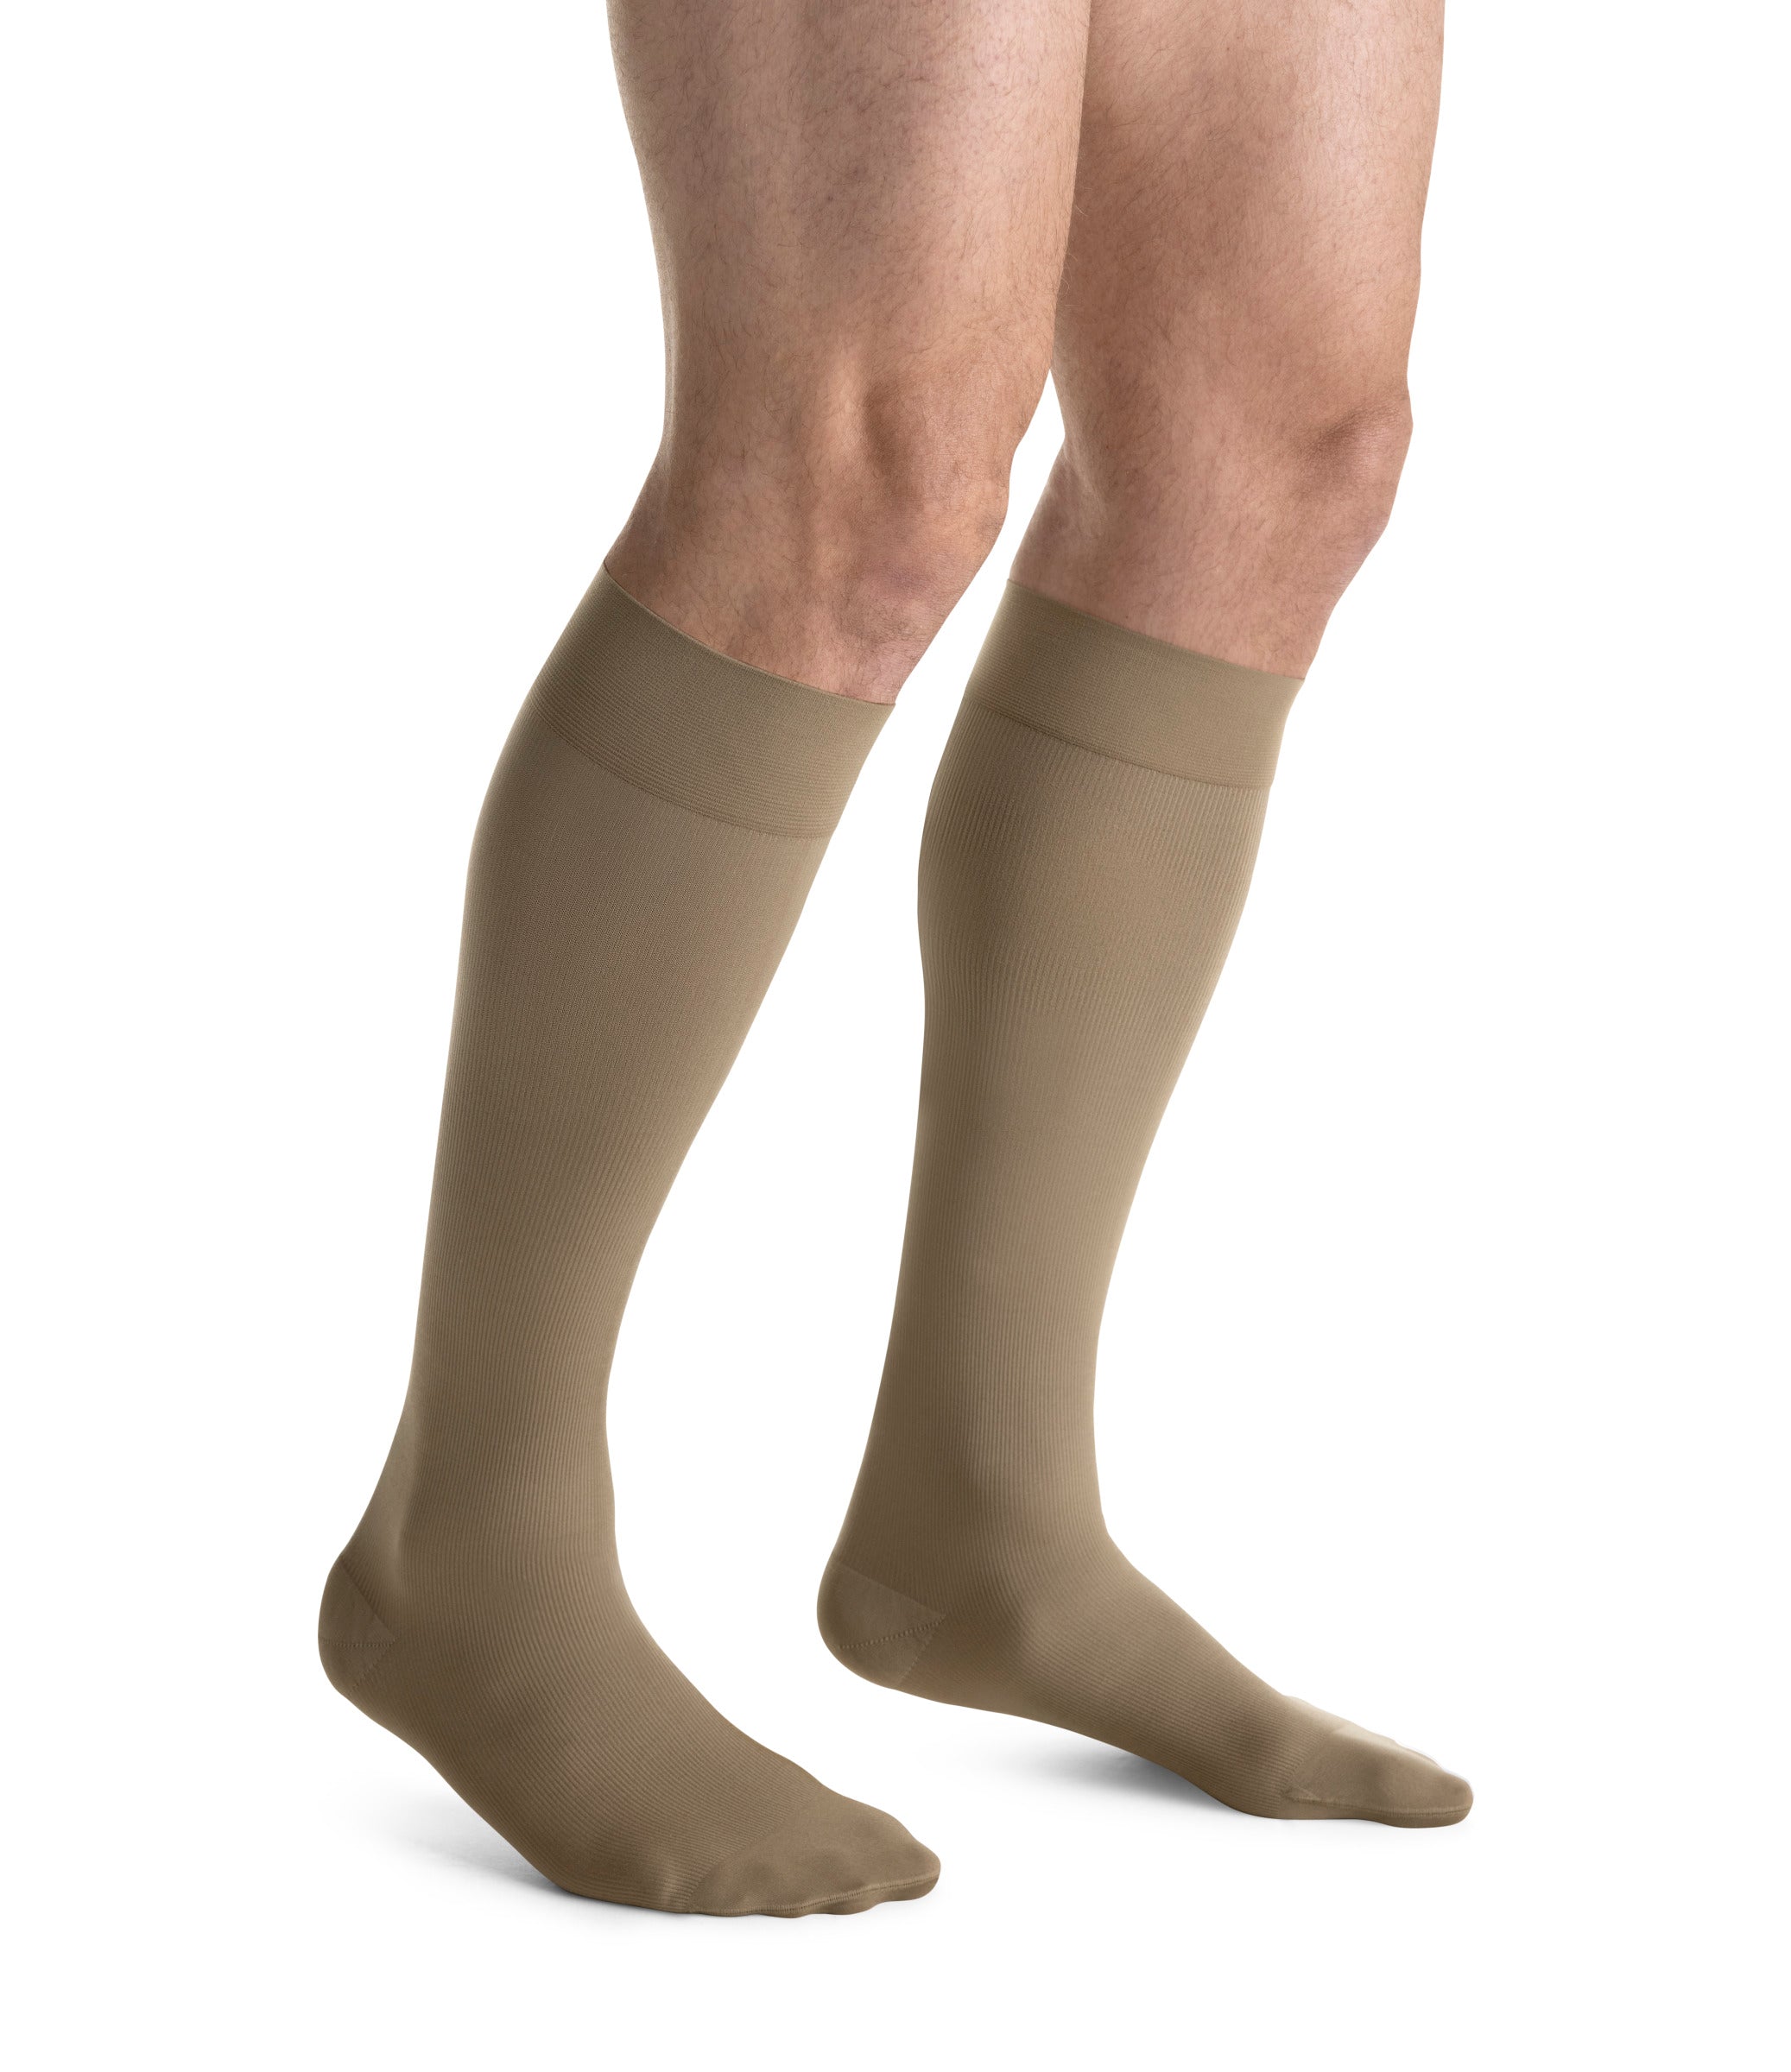 JOBST forMen Compression Socks 15-20 mmHg Knee High